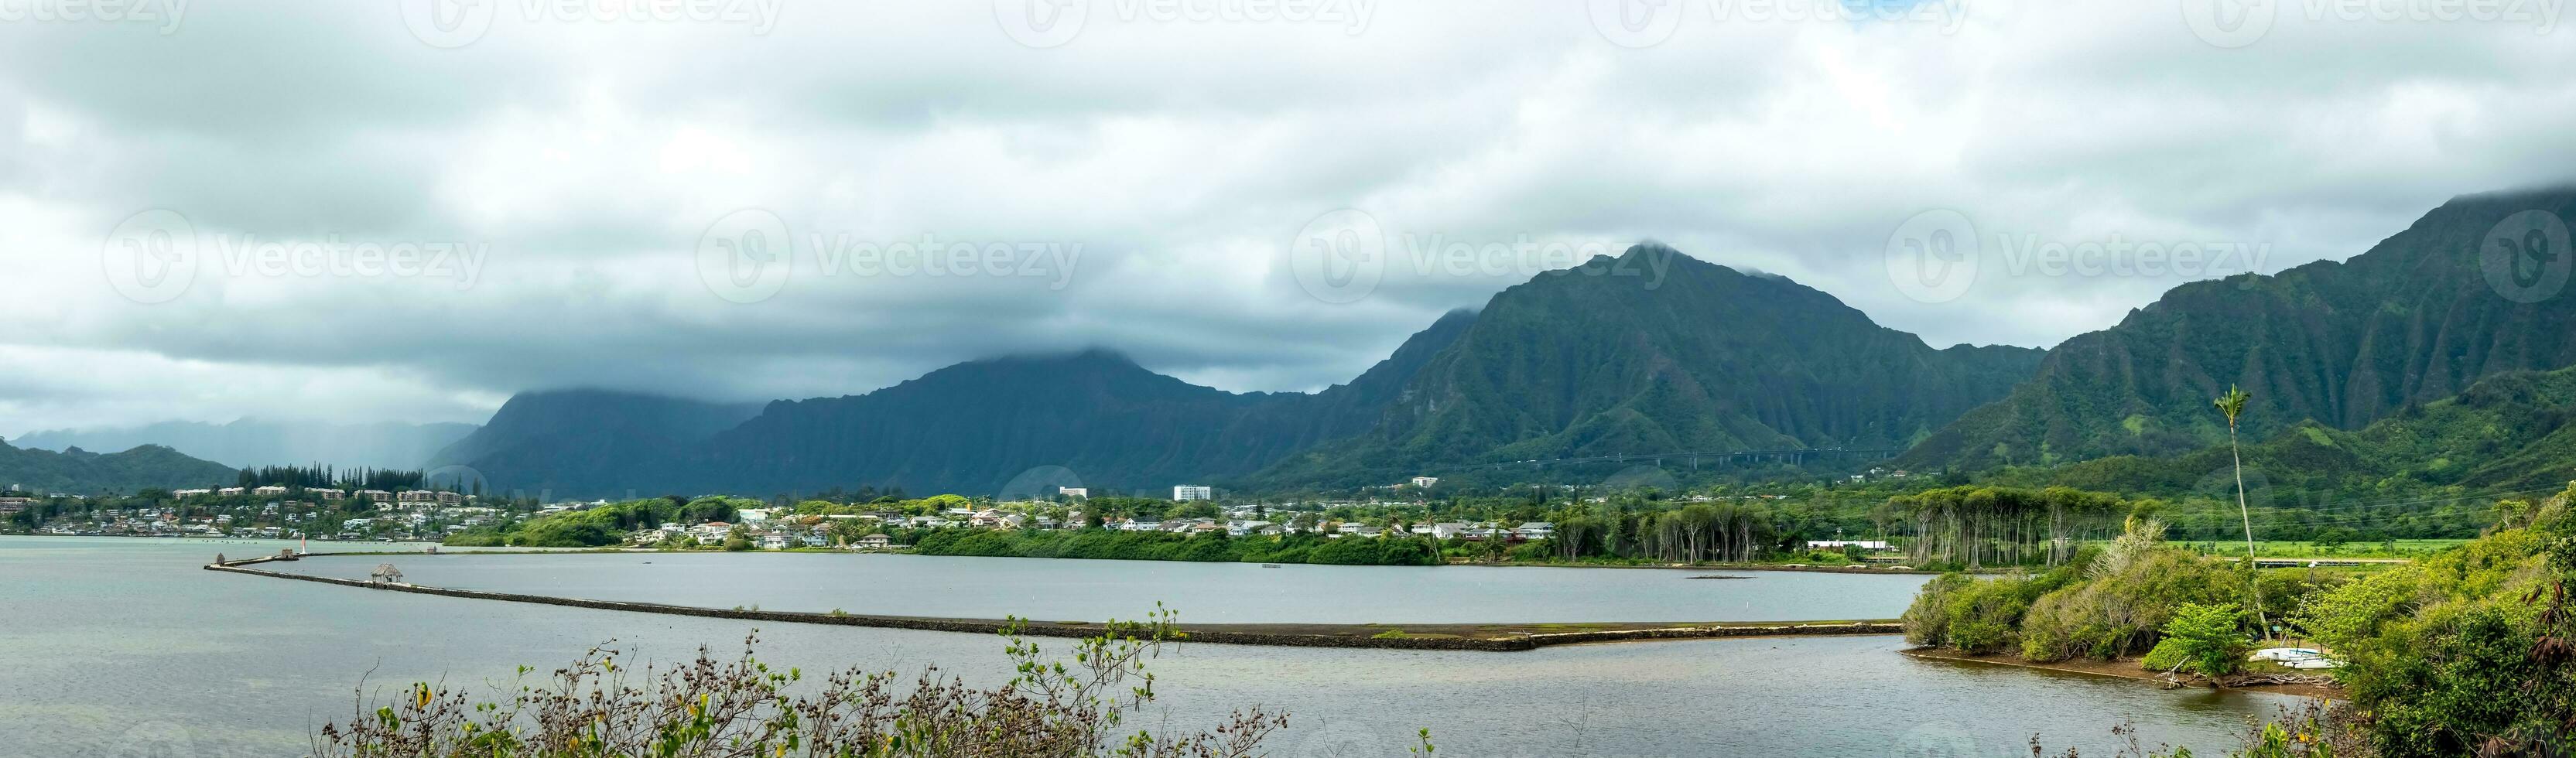 kualoa Berg Angebot Panorama- Sicht, berühmt filmen Ort auf oahu Insel, Hawaii foto